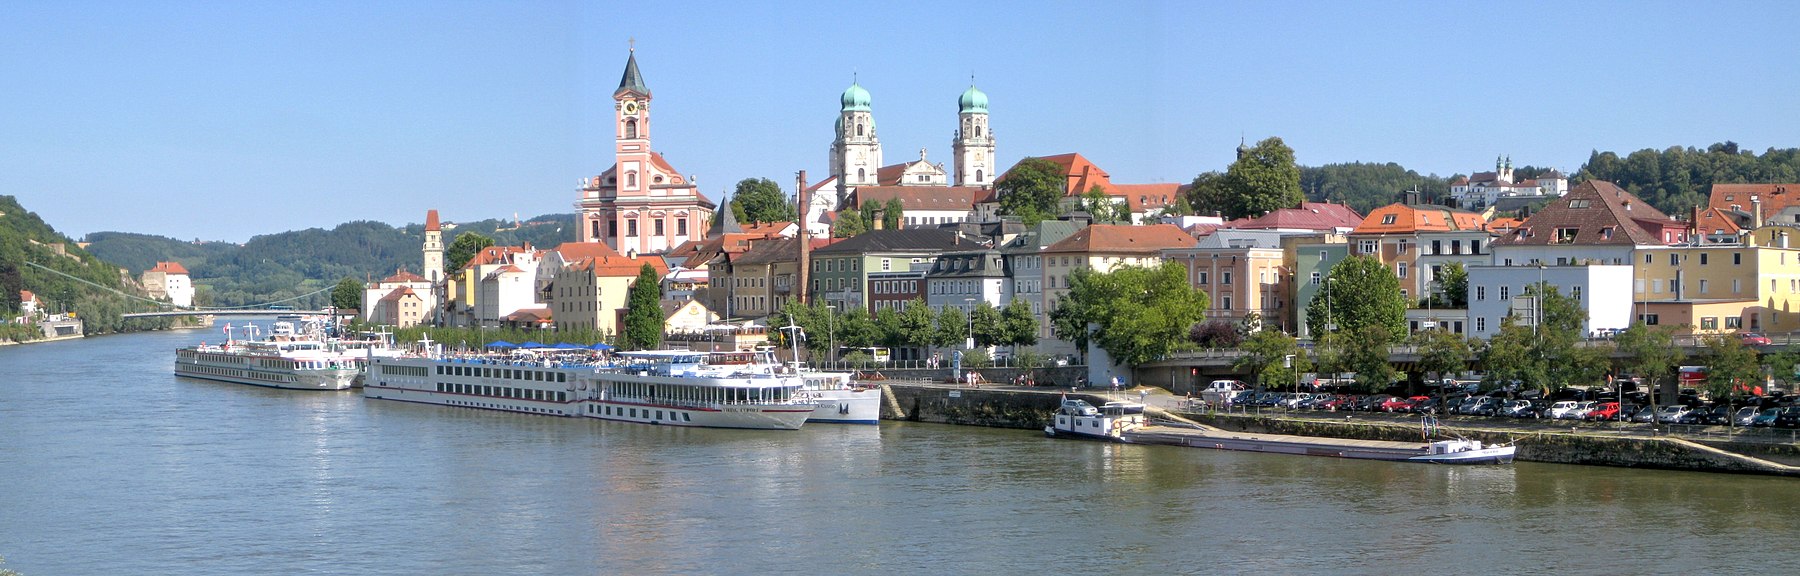 Passau Altstadt Panoraması 5.jpg